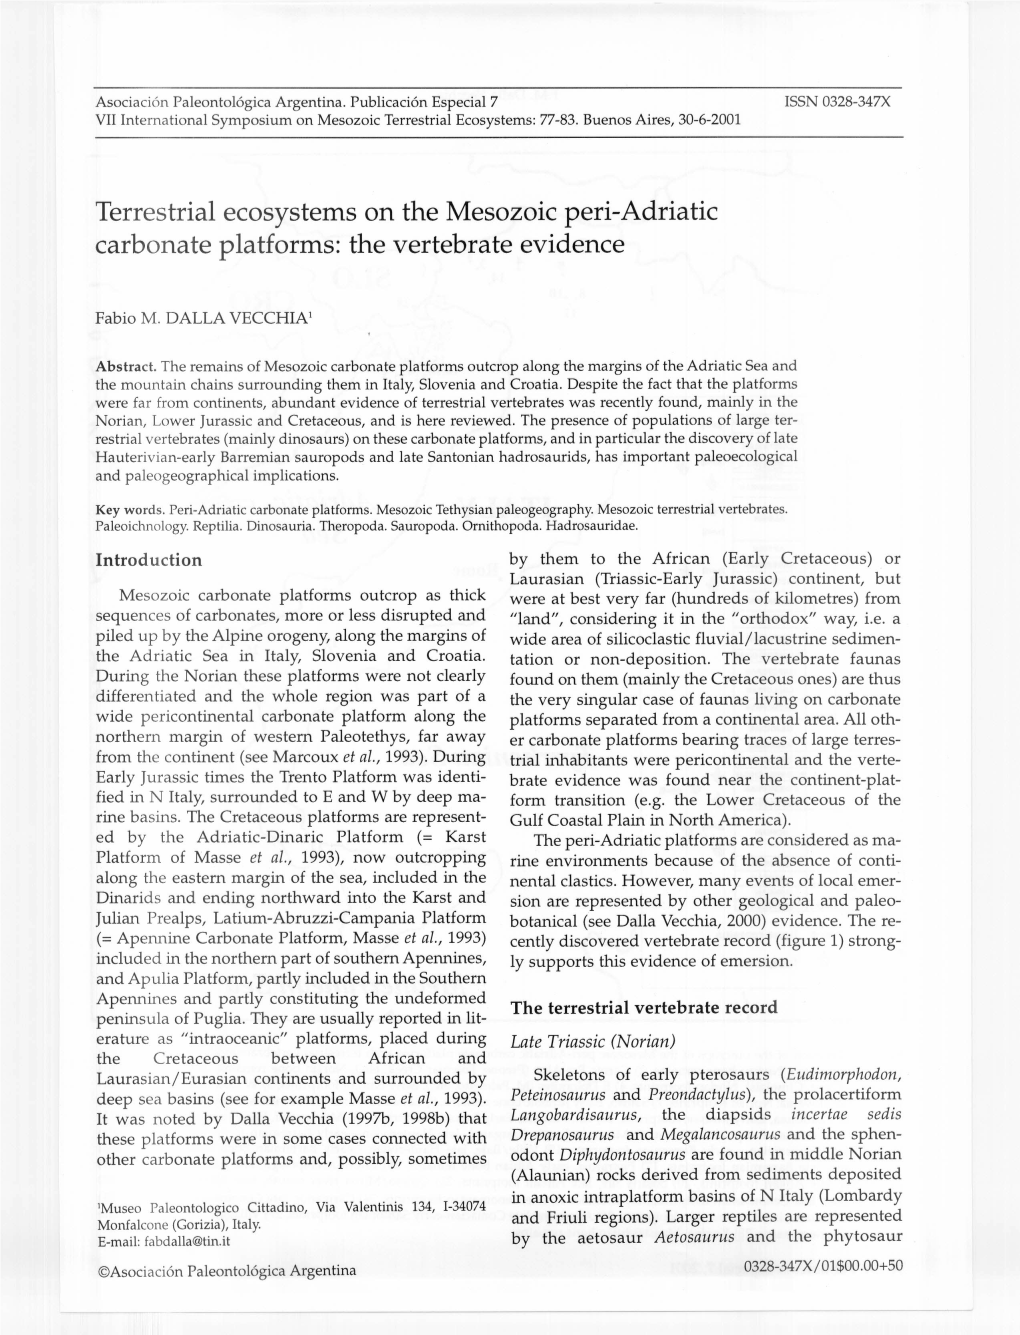 Terrestrial Ecosystems on the Mesozoic Peri-Adriatic Carbonate Platforms: the Vertebrate Evidence